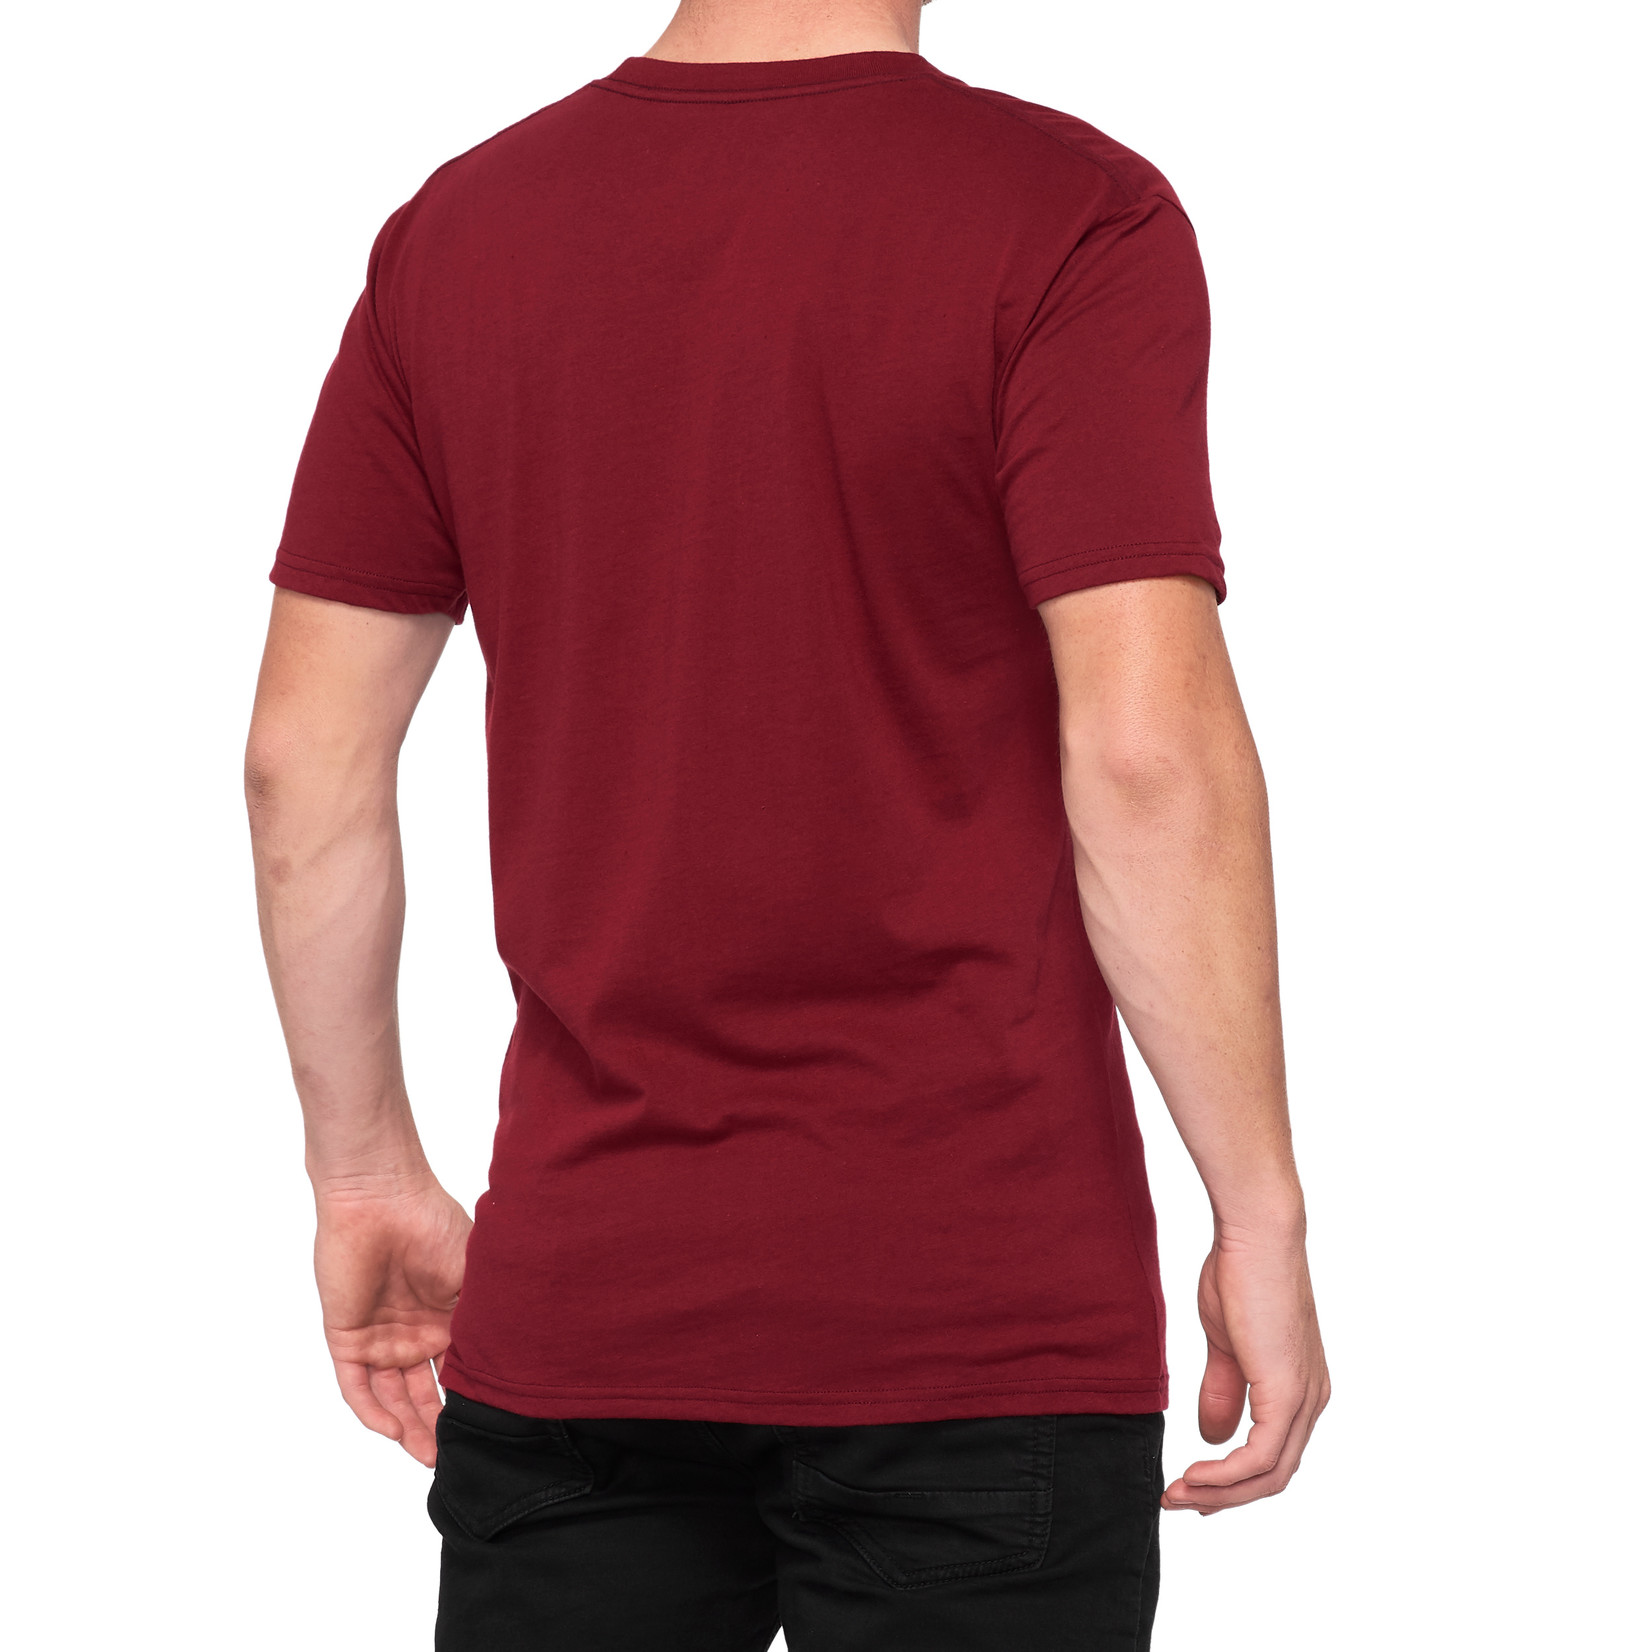 FE sports 100% Phantom Tech Tee T-Shirt - Brick 85% Polyester/15% Cotton Dri-release